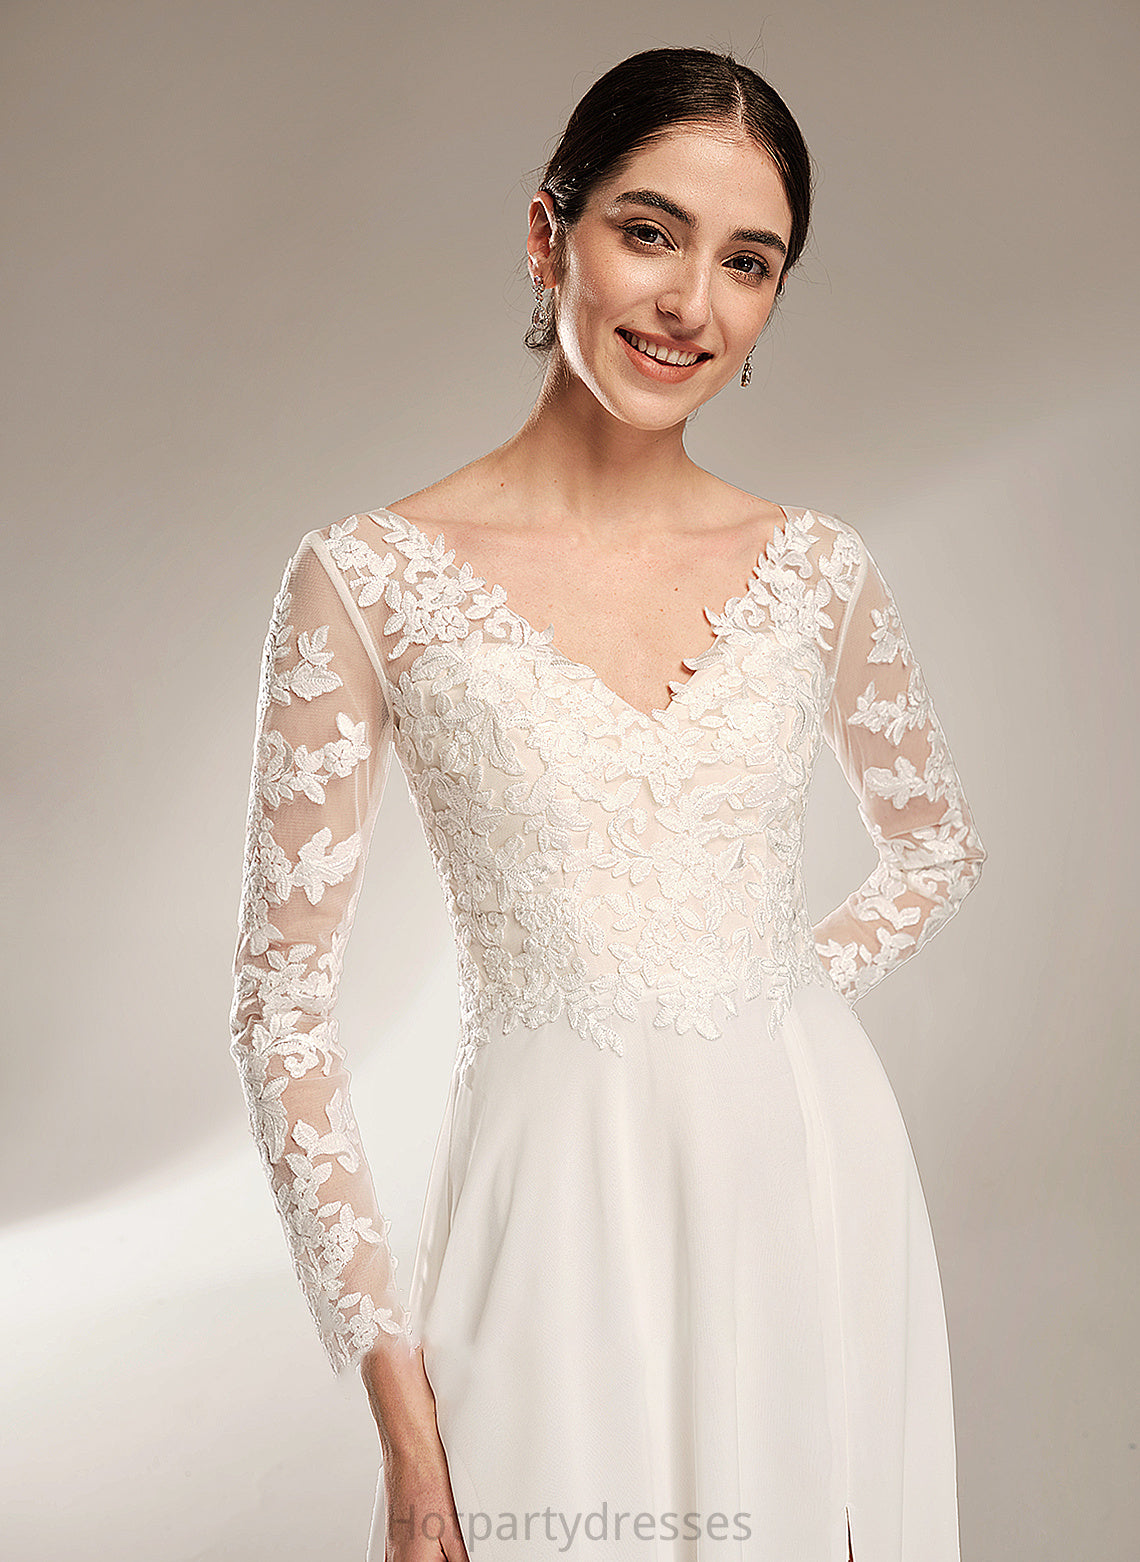 Dress Split A-Line V-neck Floor-Length Front Wedding Dresses With Alexa Wedding